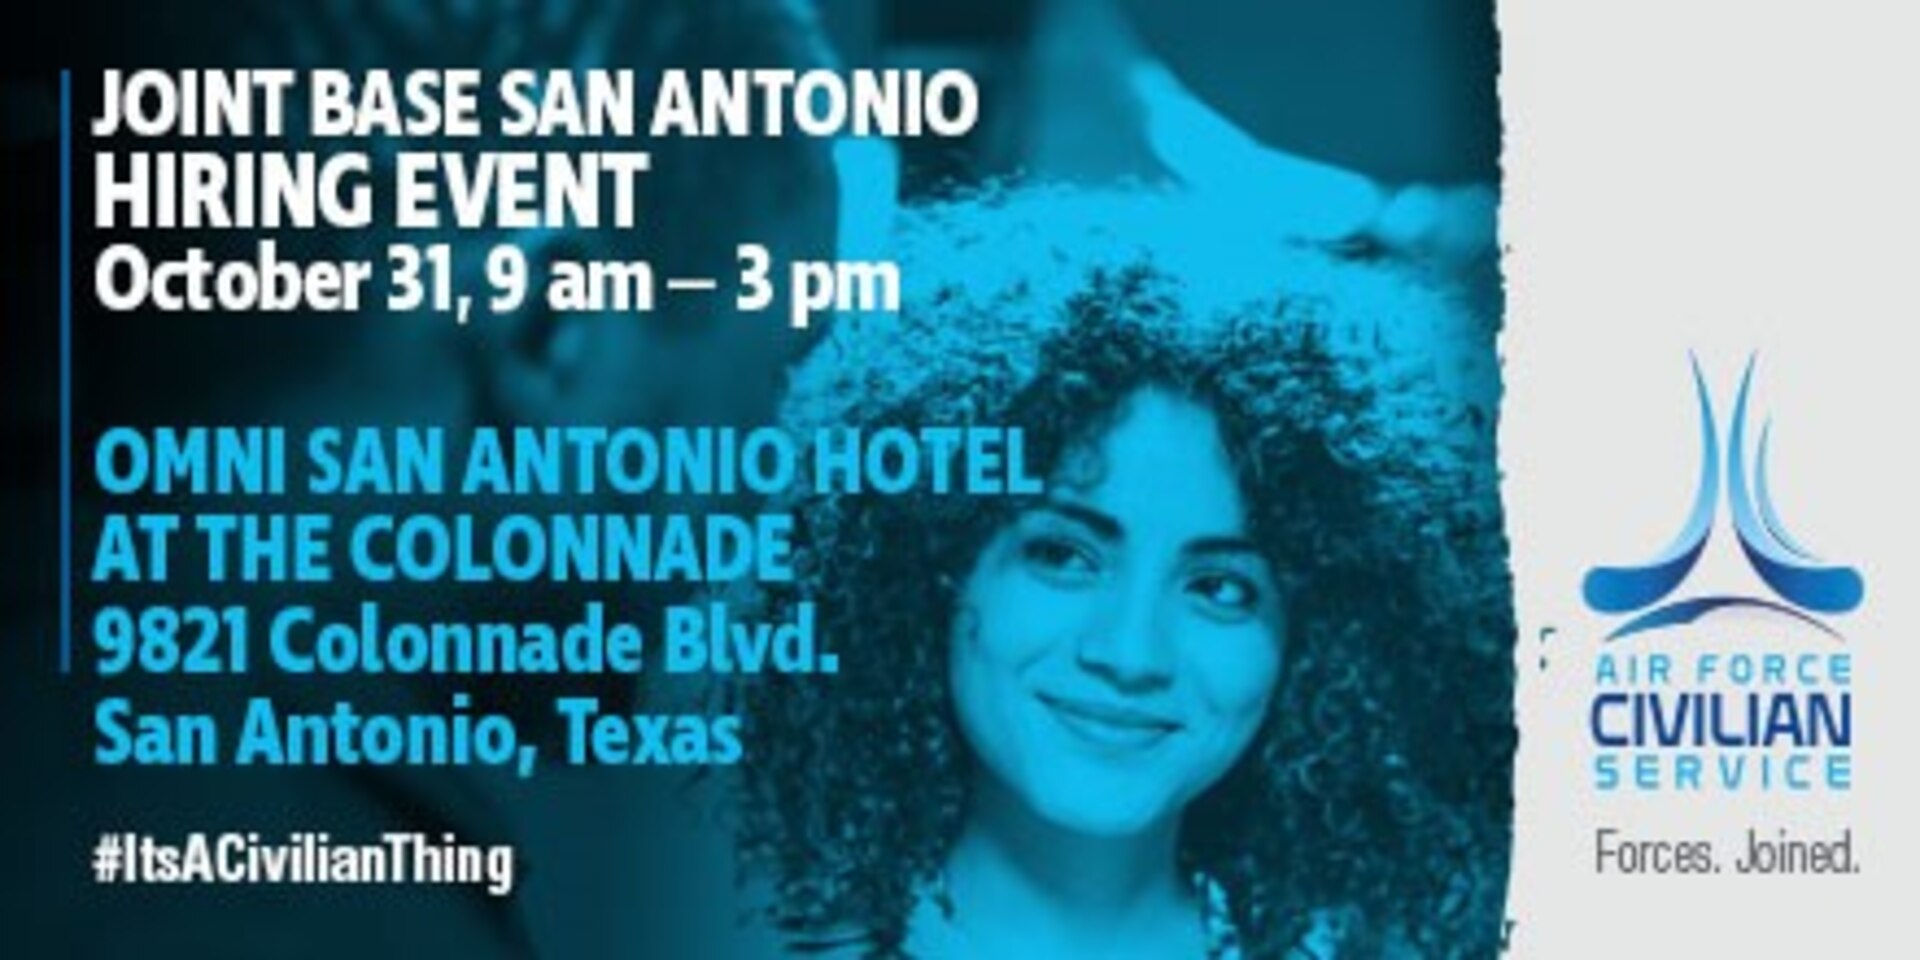 JBSA hiring event Oct. 31, 9 a.m. to 3 p.m. at the Omni San Antonio Hotel.